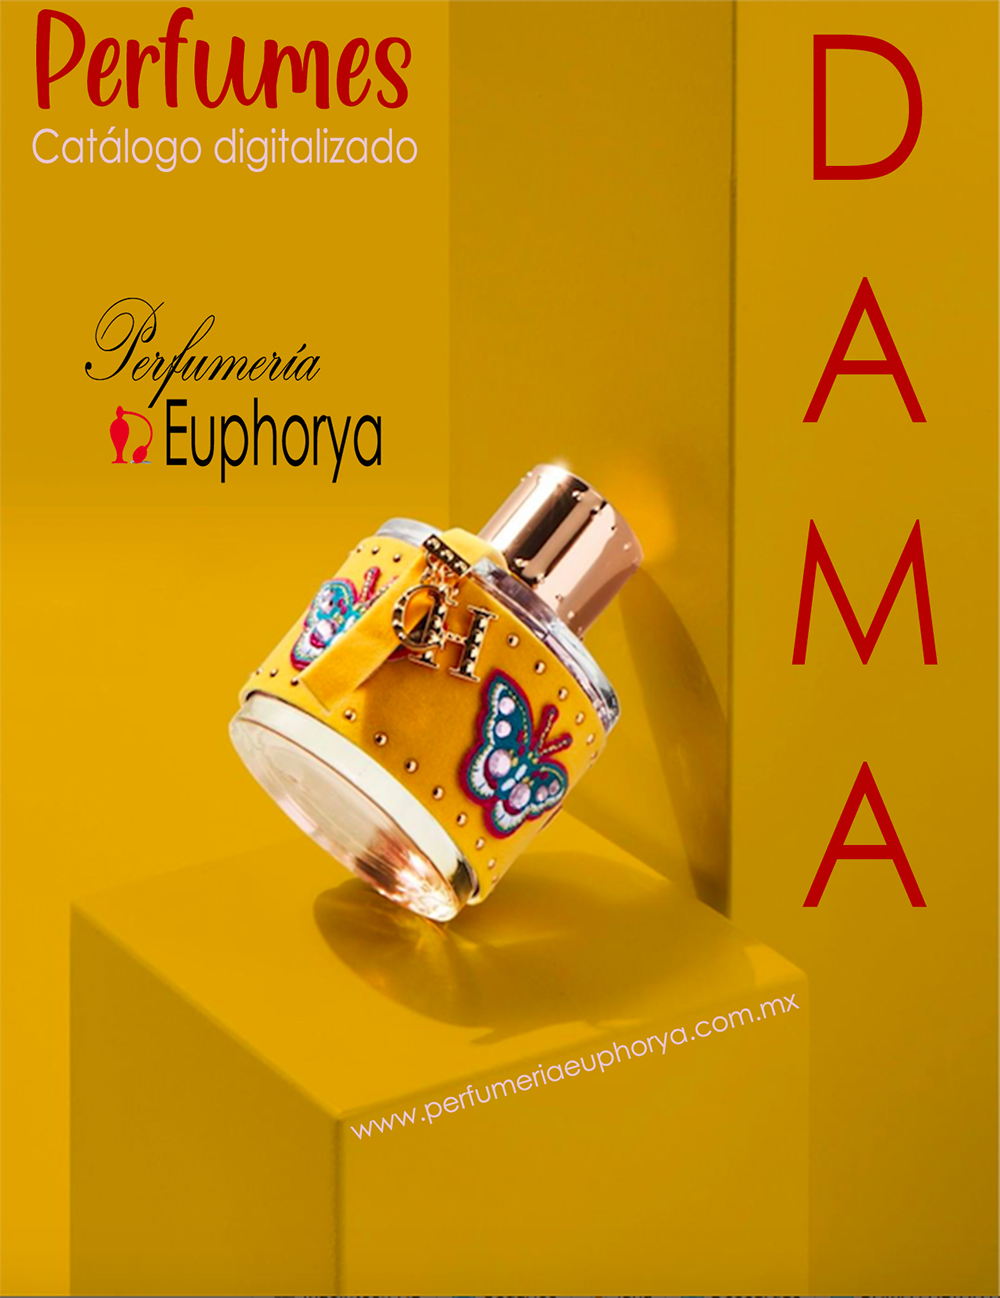 Catálogo digital de perfumes - Perfumeria Euphorya